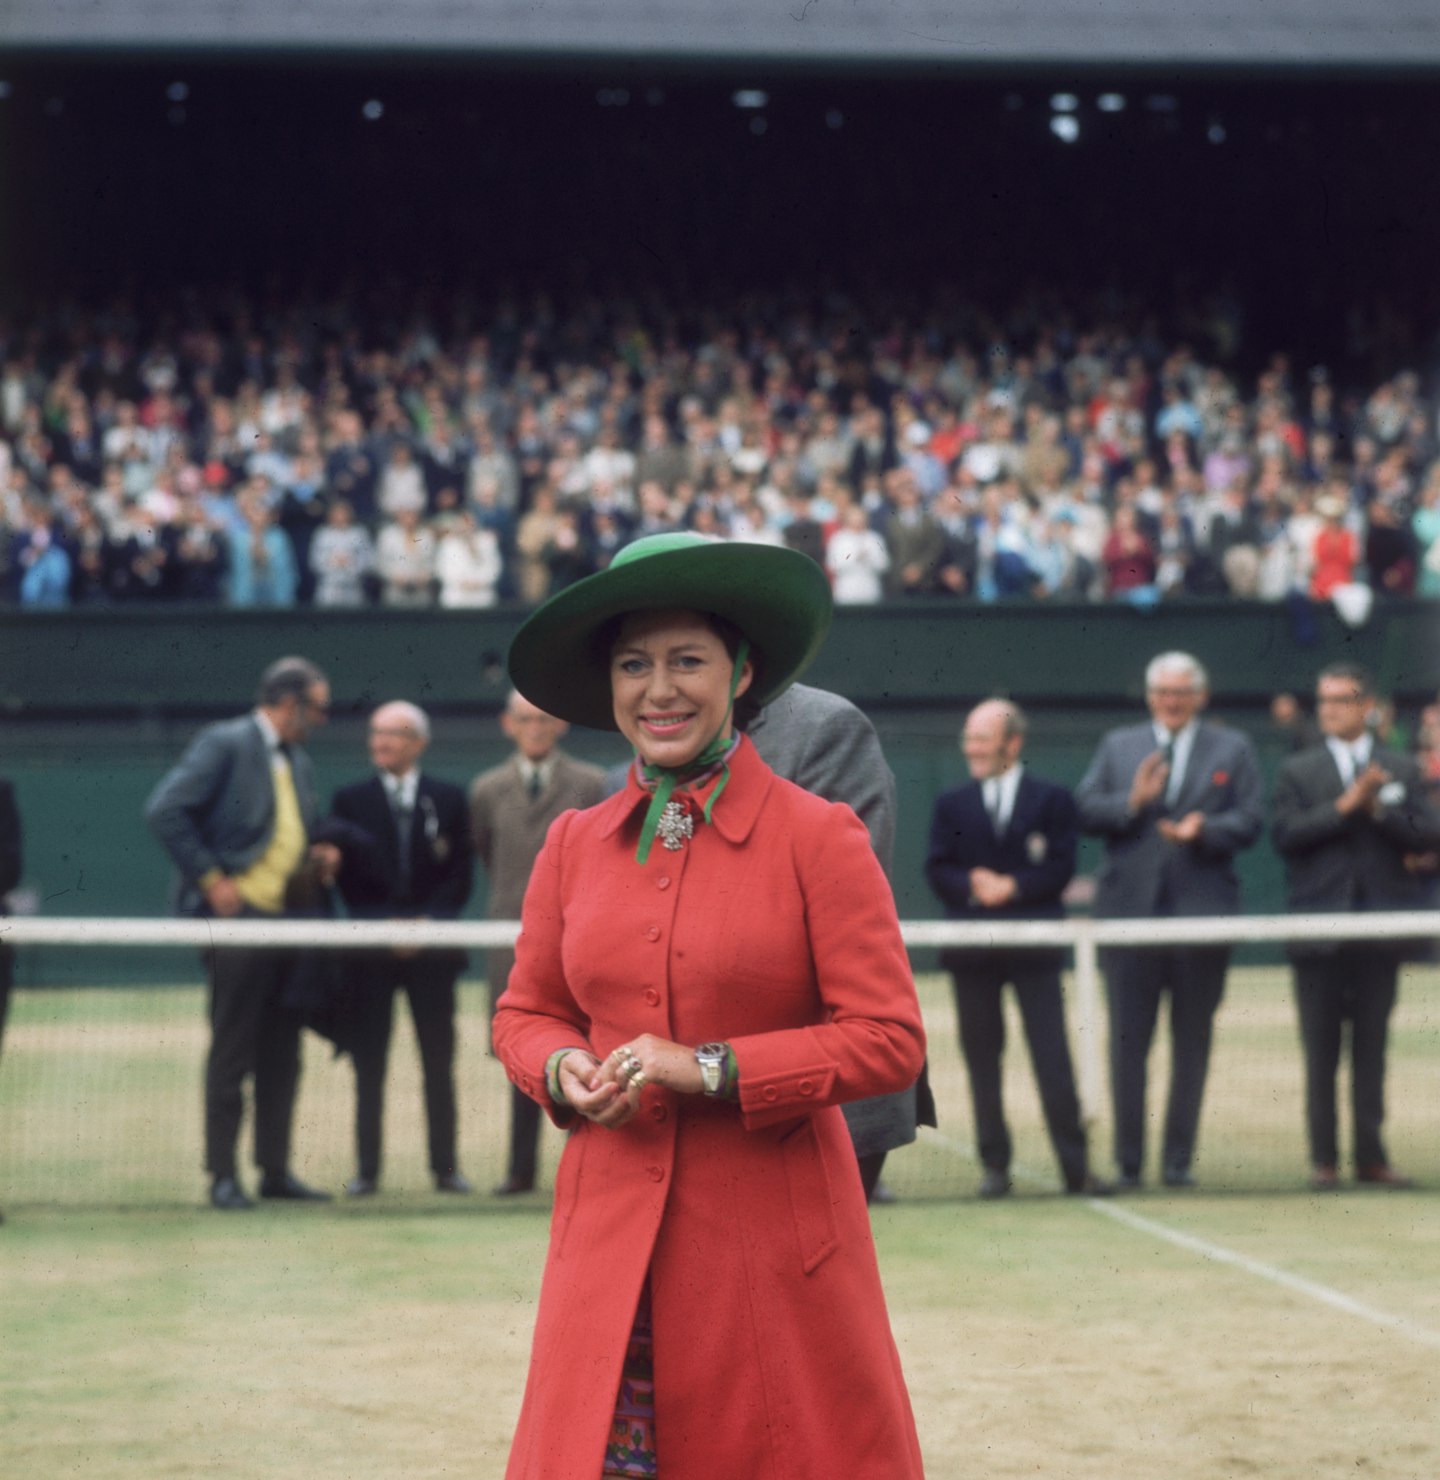 Royal Fashion at Wimbledon